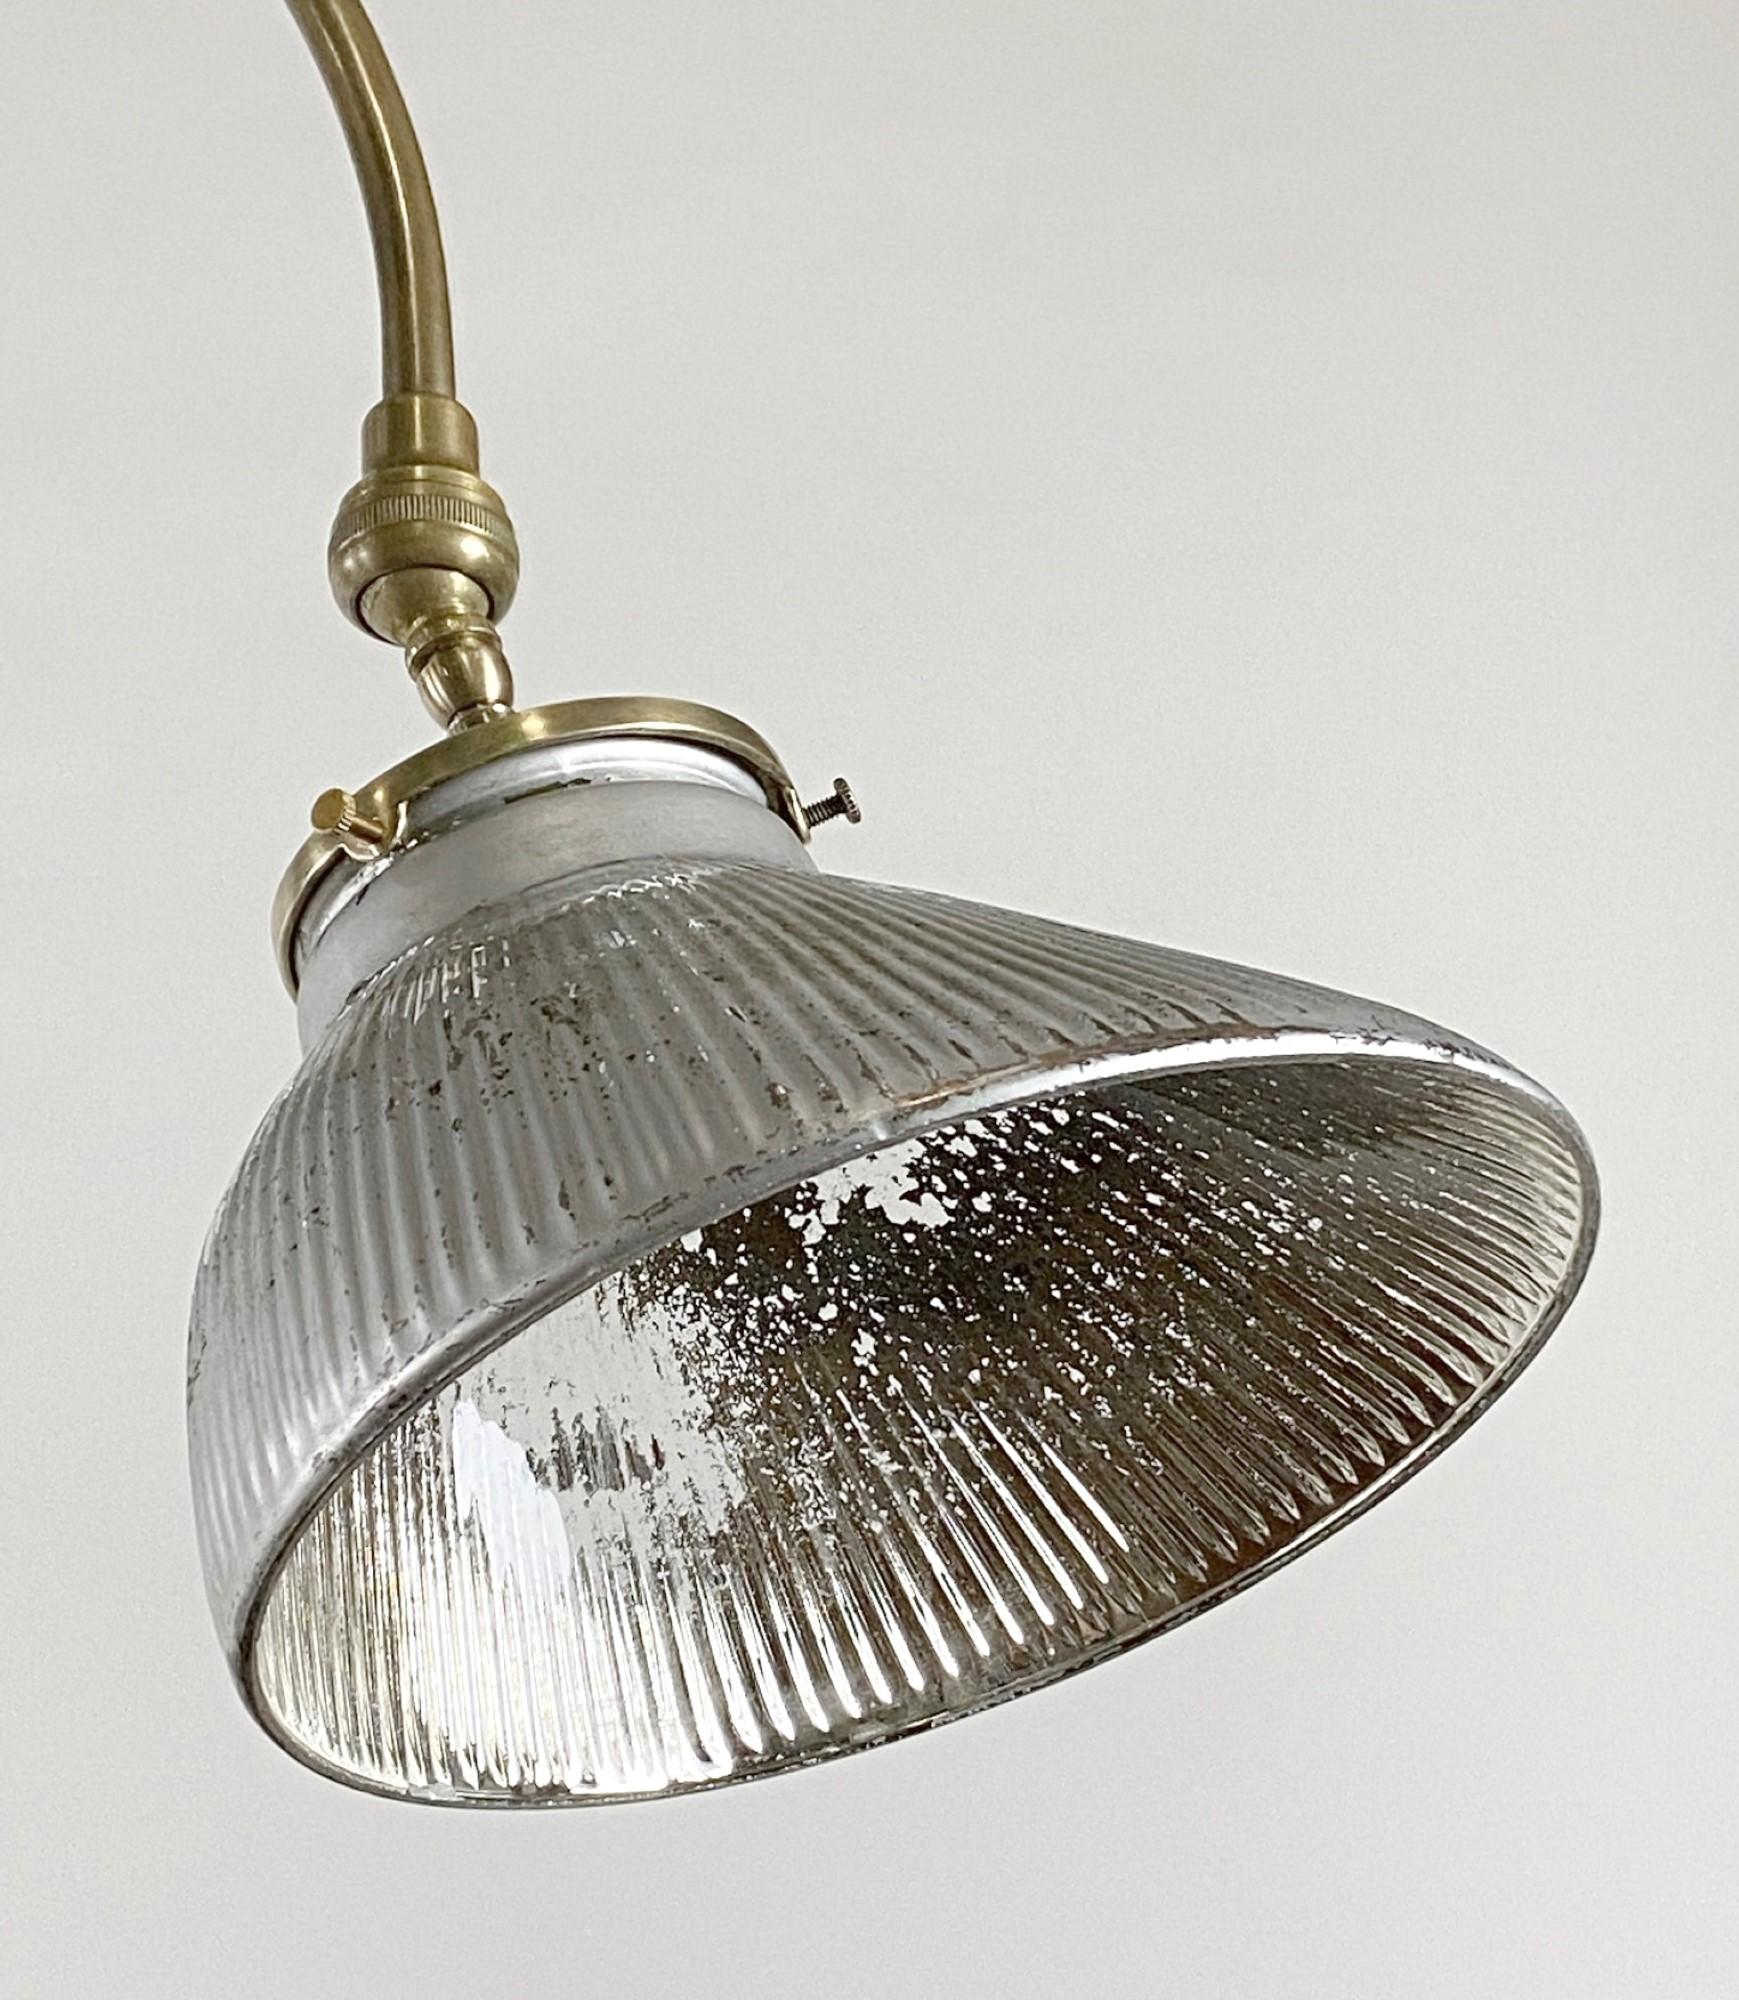 Industrial 1920s Gooseneck Brass Desk Lamp & Mercury Glass Shade